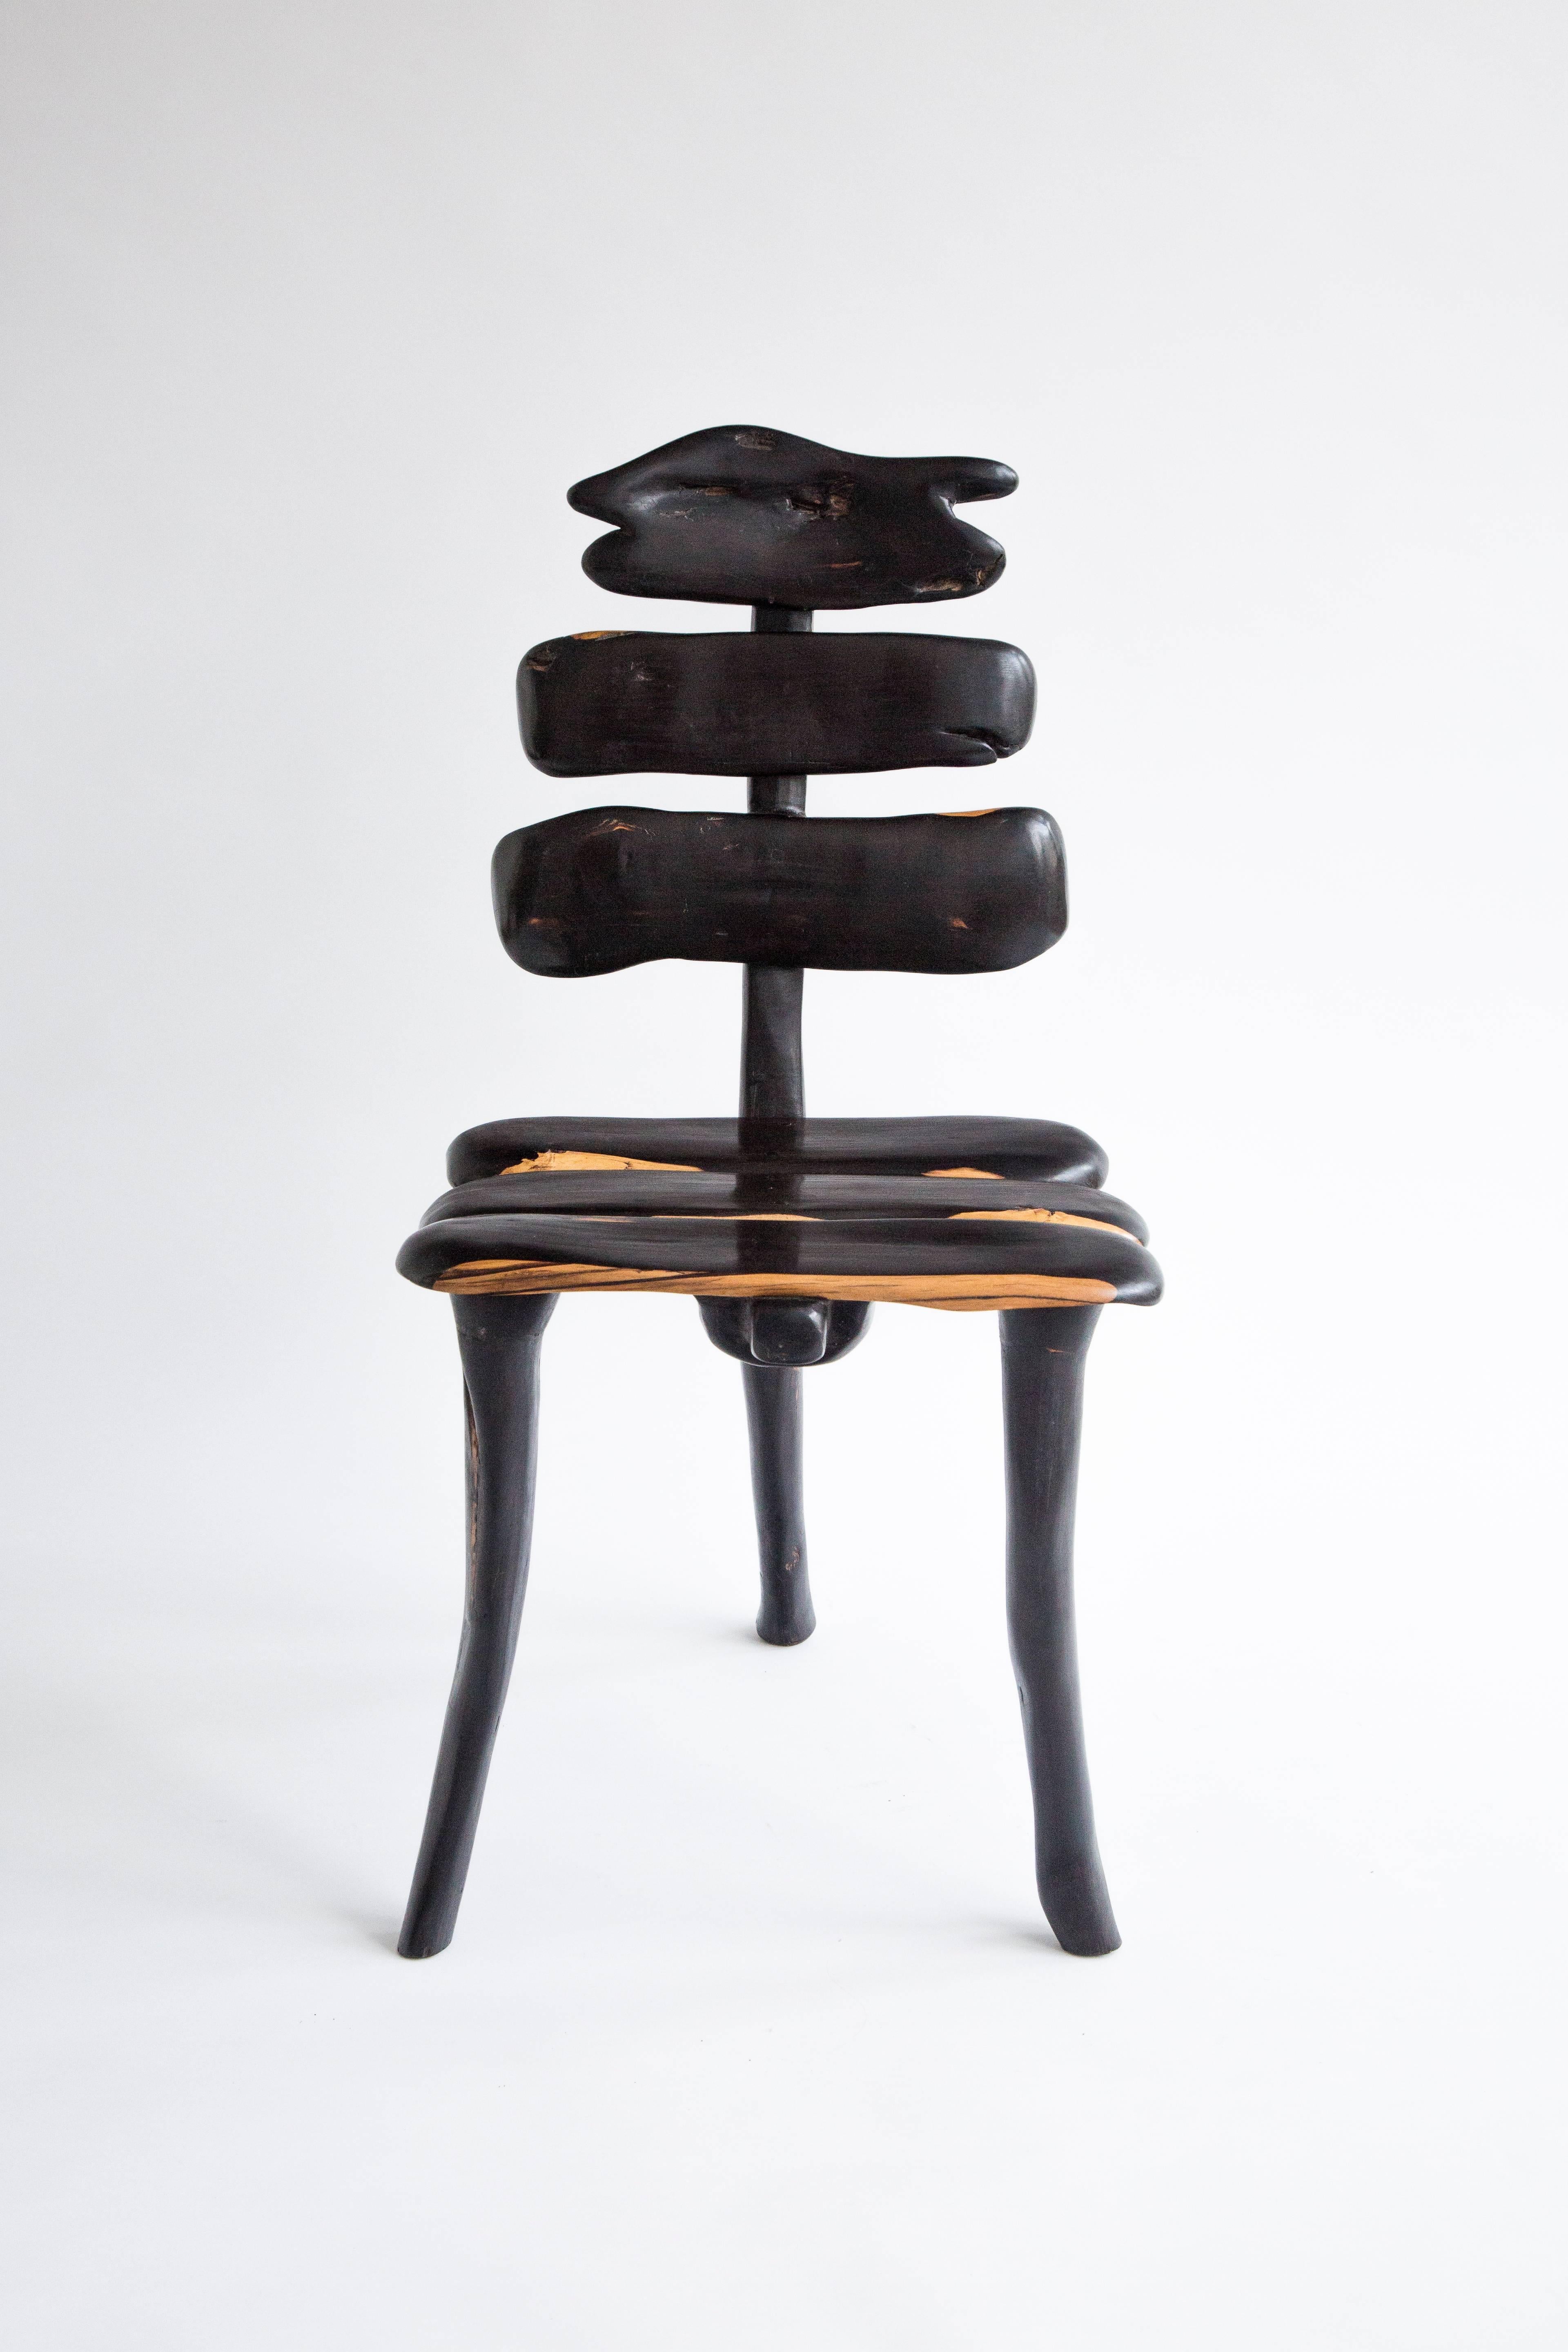 Balla Niang Abstract Sculpture - Vertebrae Chair